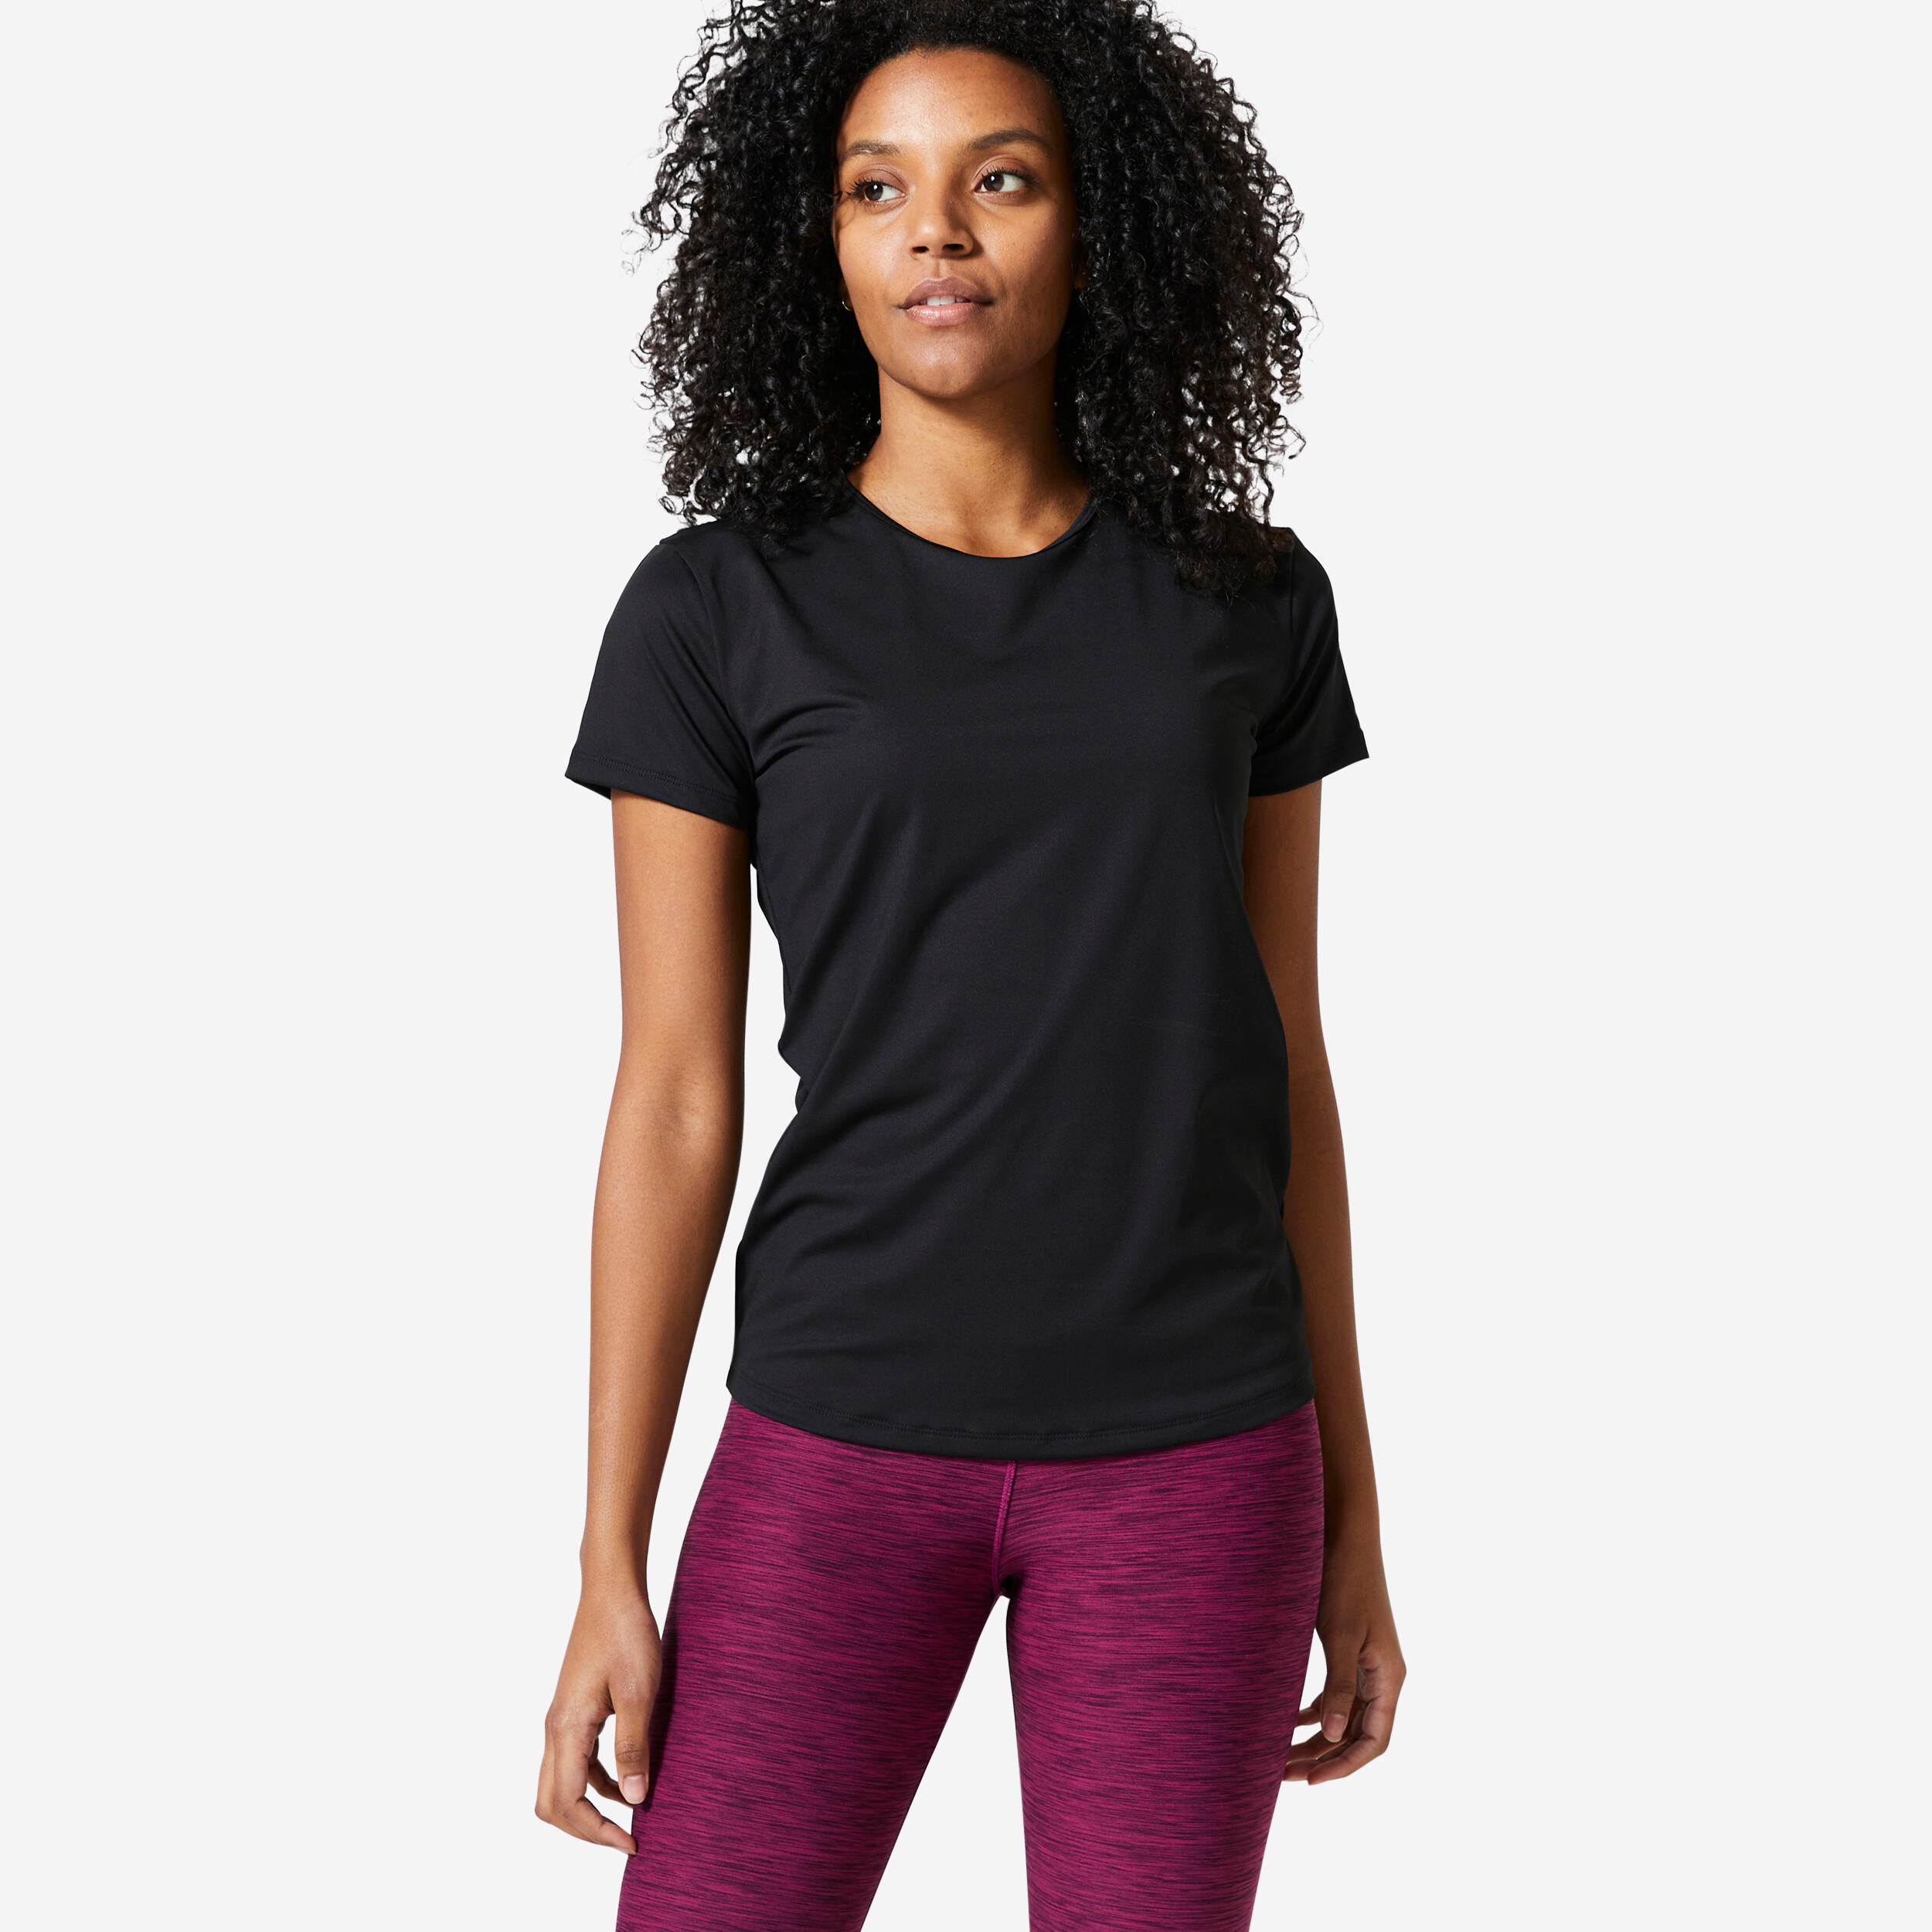 Women's Short-Sleeved Cardio Fitness T-Shirt - Black 1/5